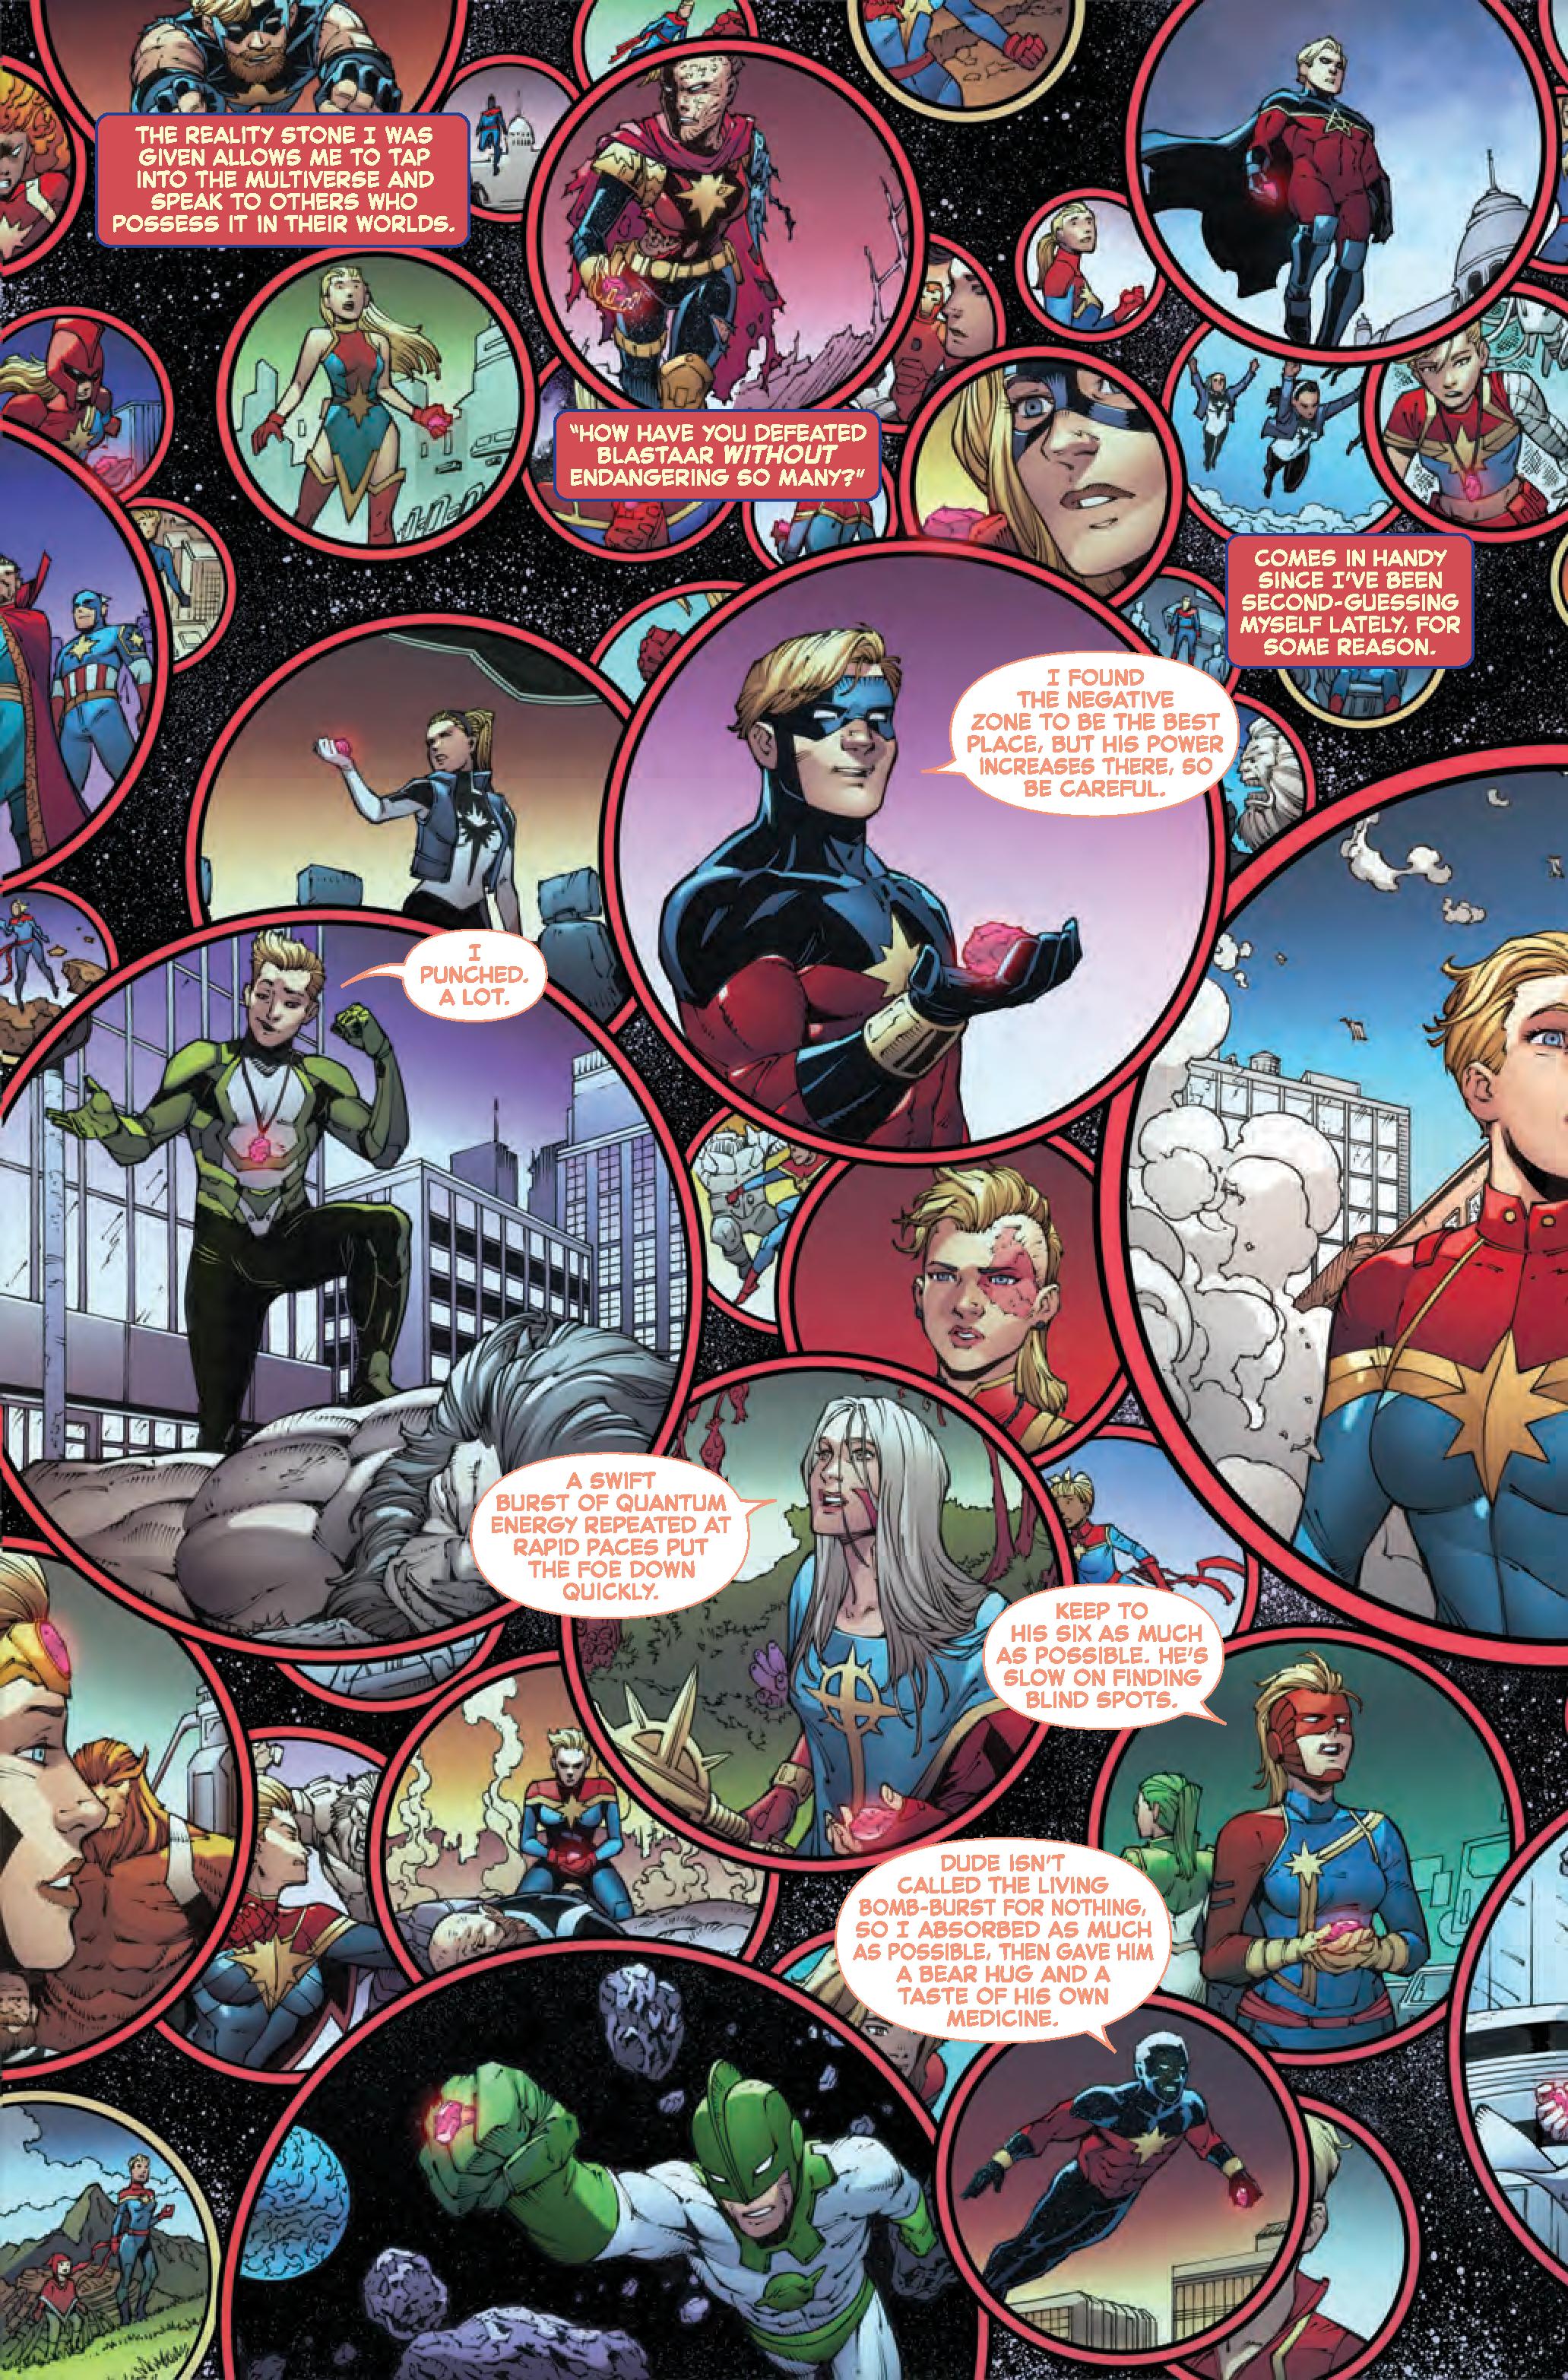 Infinity Countdown Captain Marvel #1